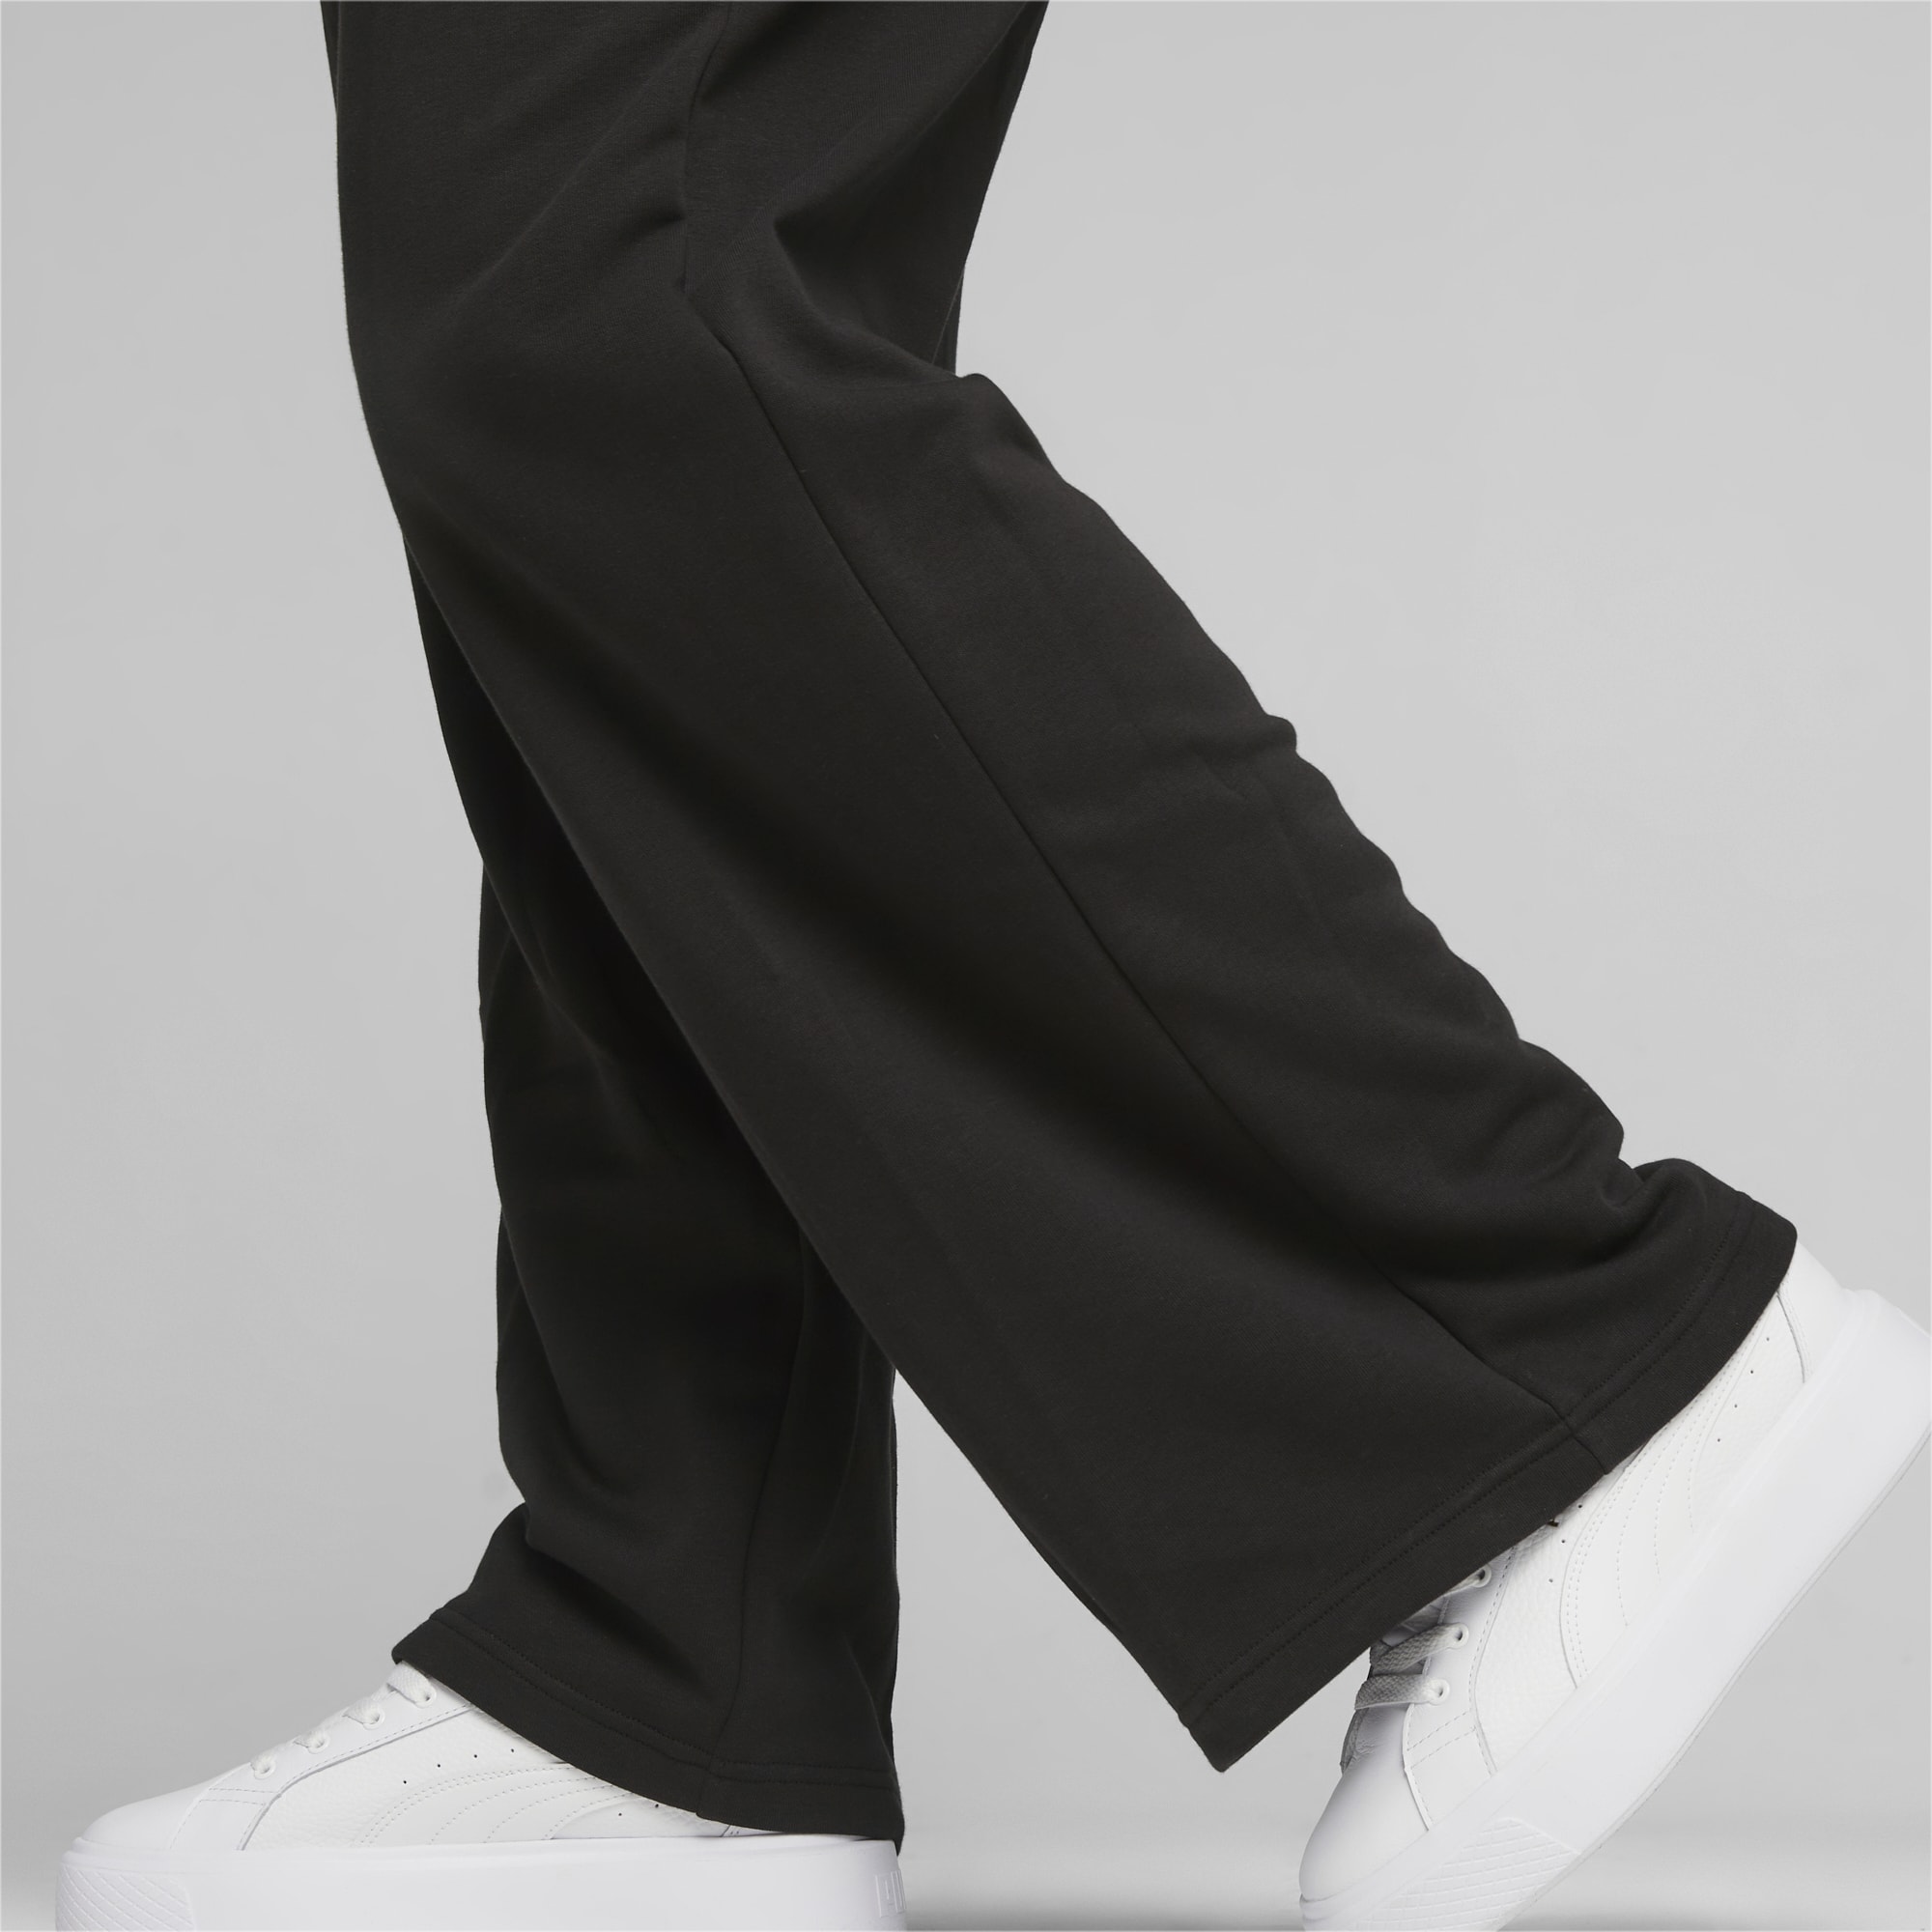 PUMA Classics Women's Relaxed Sweatpants, Black, Size 3XL, Clothing